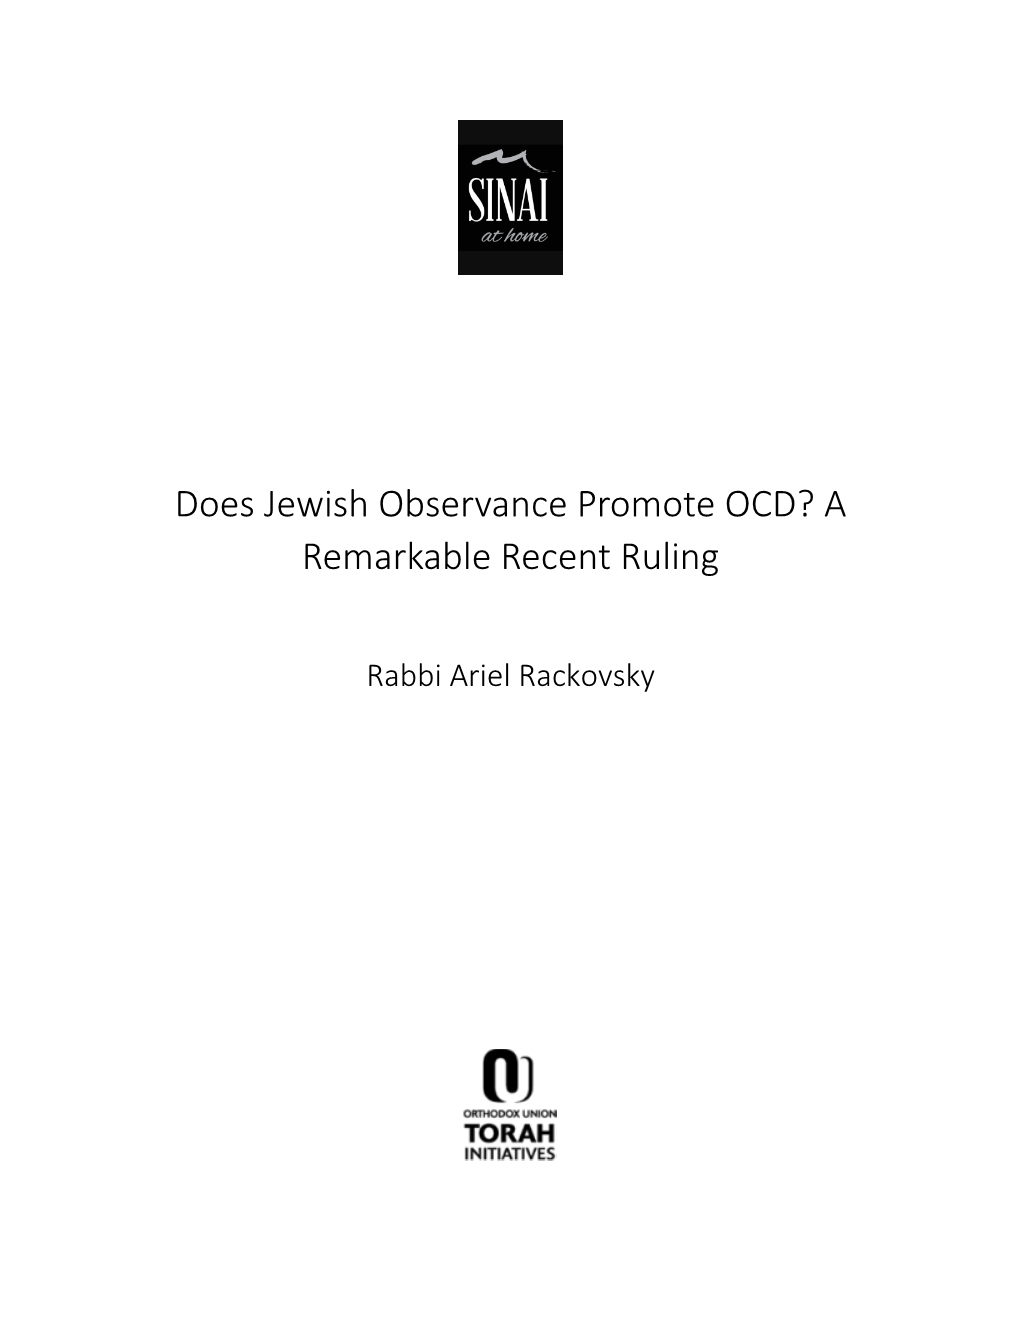 Does Jewish Observance Promote OCD? a Remarkable Recent Ruling Rabbi Ariel Rackovsky